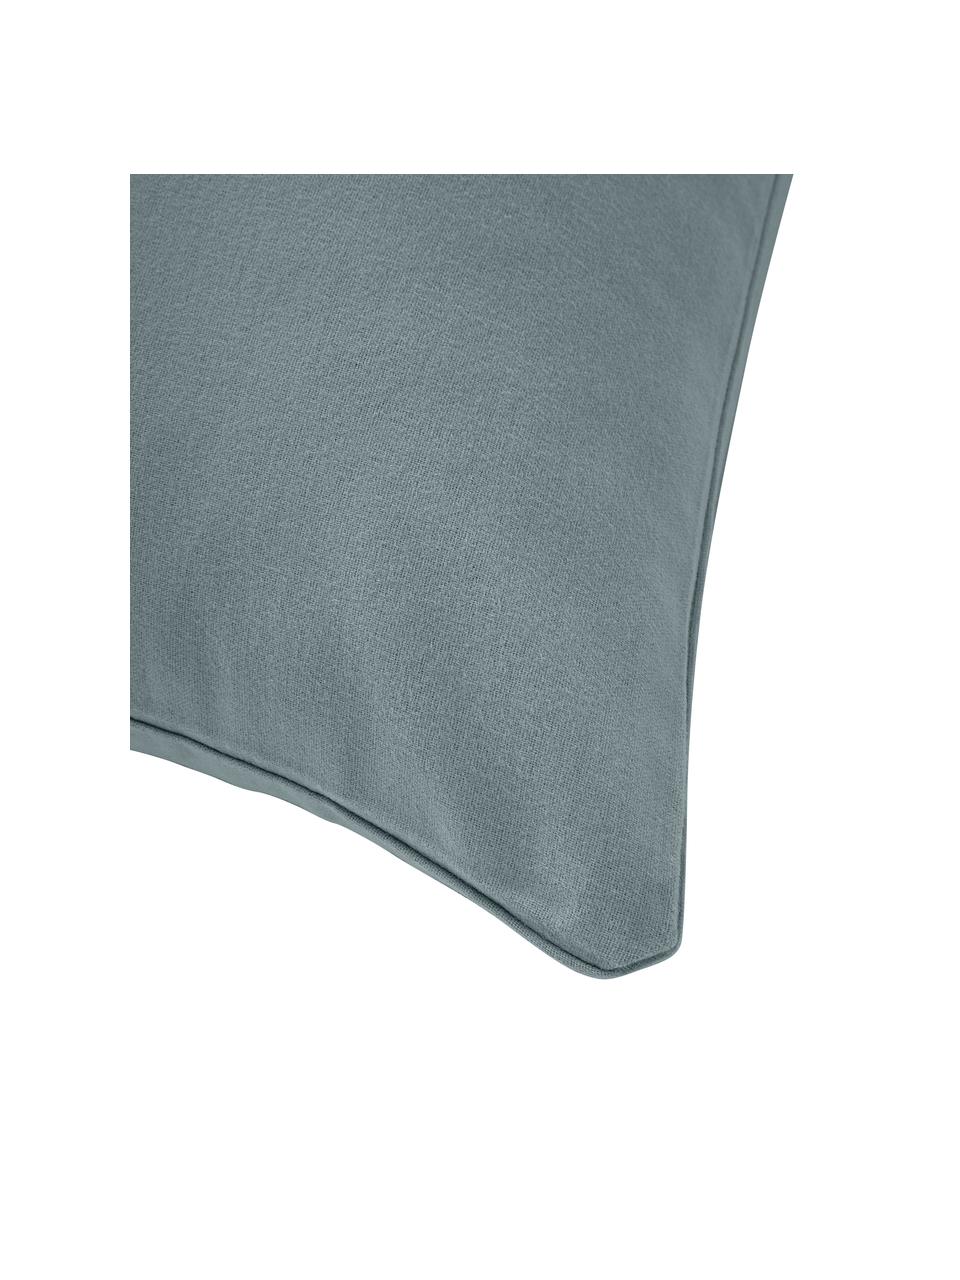 Flanell-Kopfkissenbezug Biba, Webart: Flanell Flanell ist ein k, Graugrün, B 40 x L 80 cm